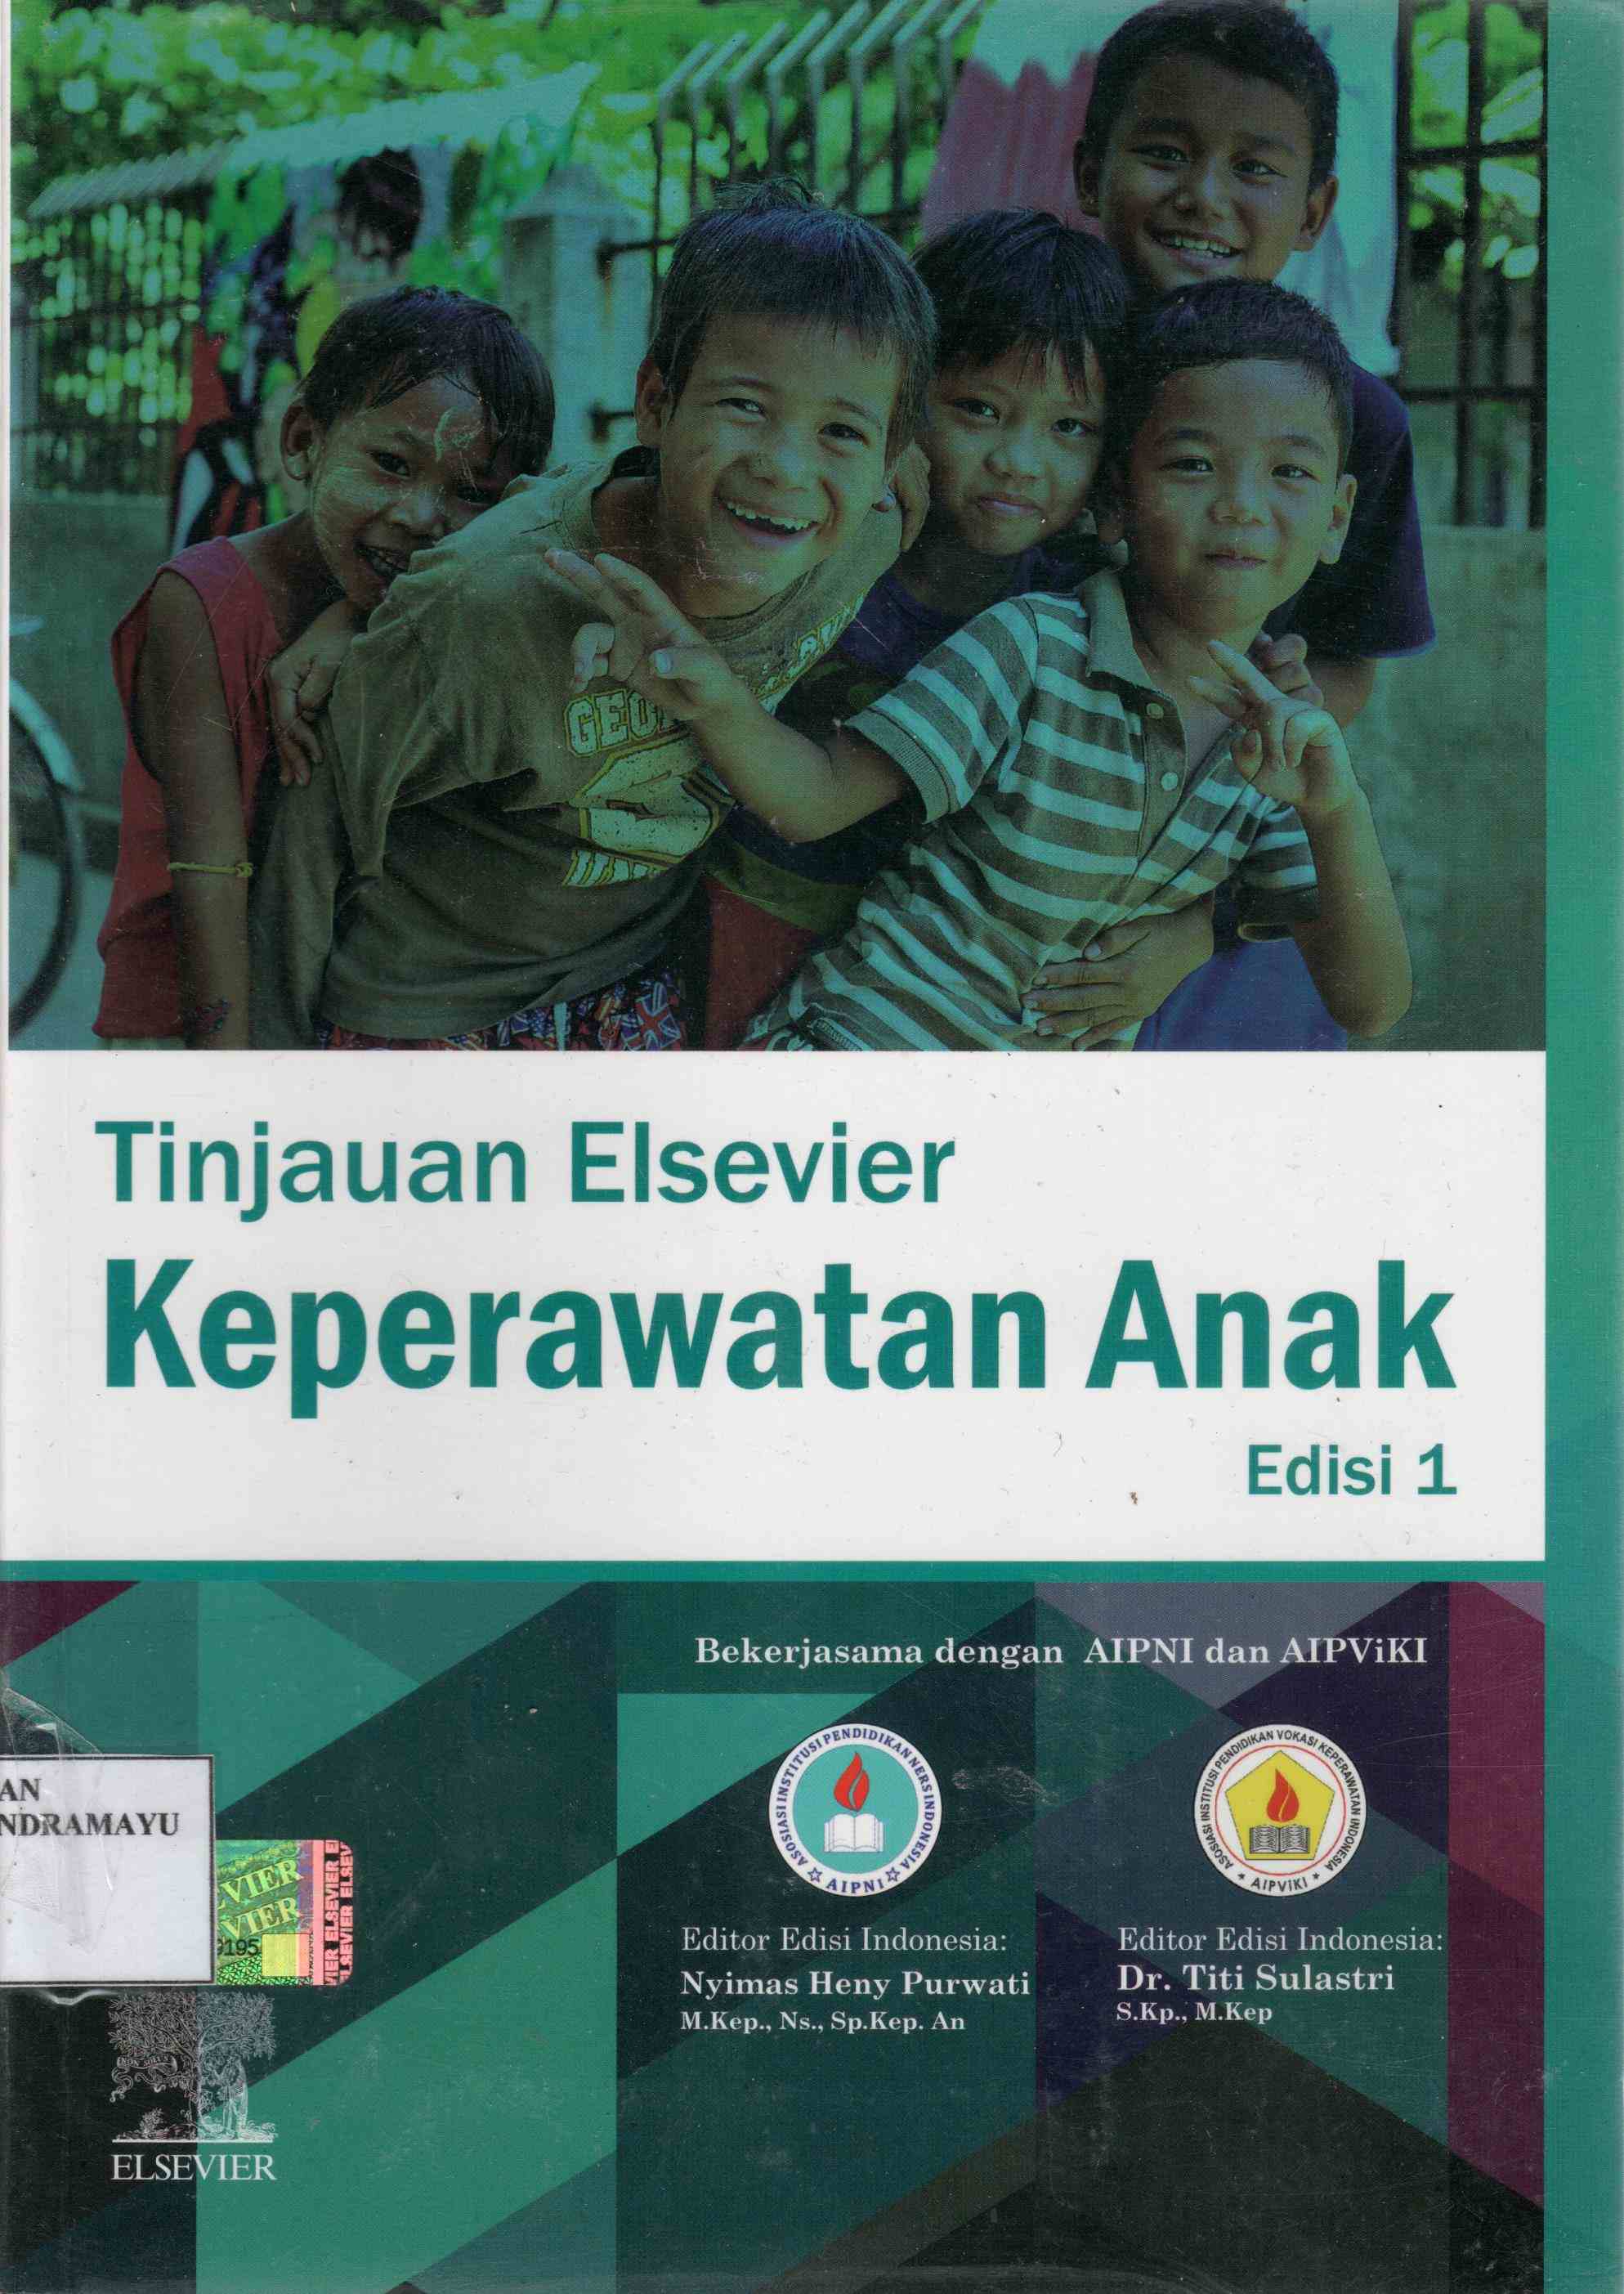 Image of Tinjauan Elsevier Keperawatan Anak